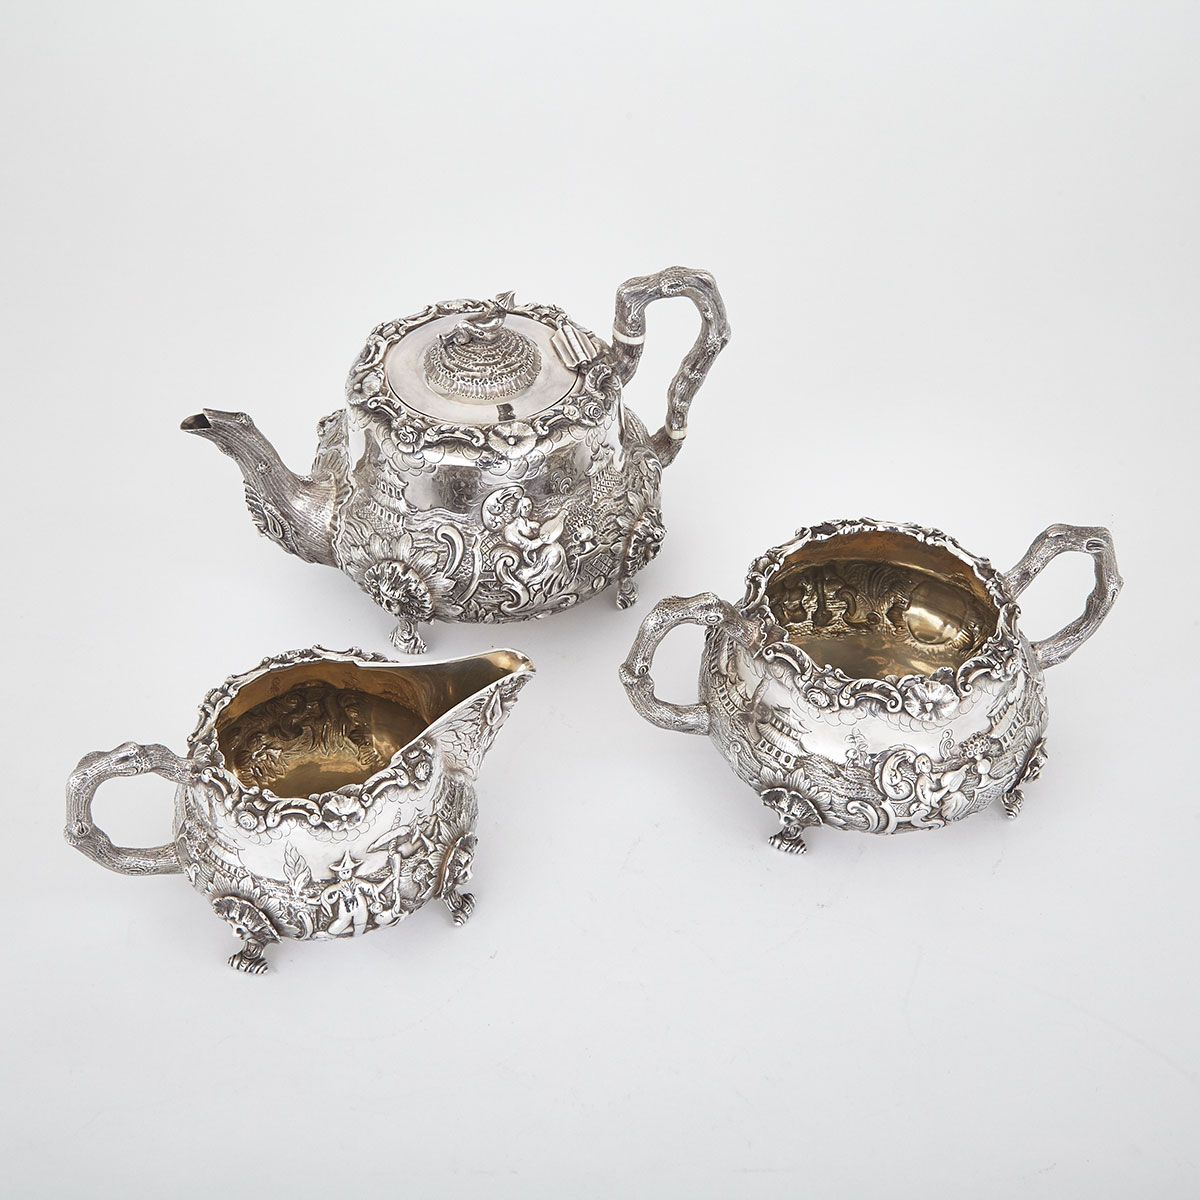 Victorian Silver Chinoiserie Tea Service, Charles Gordon and Francis David Dexter, London, 1840/41